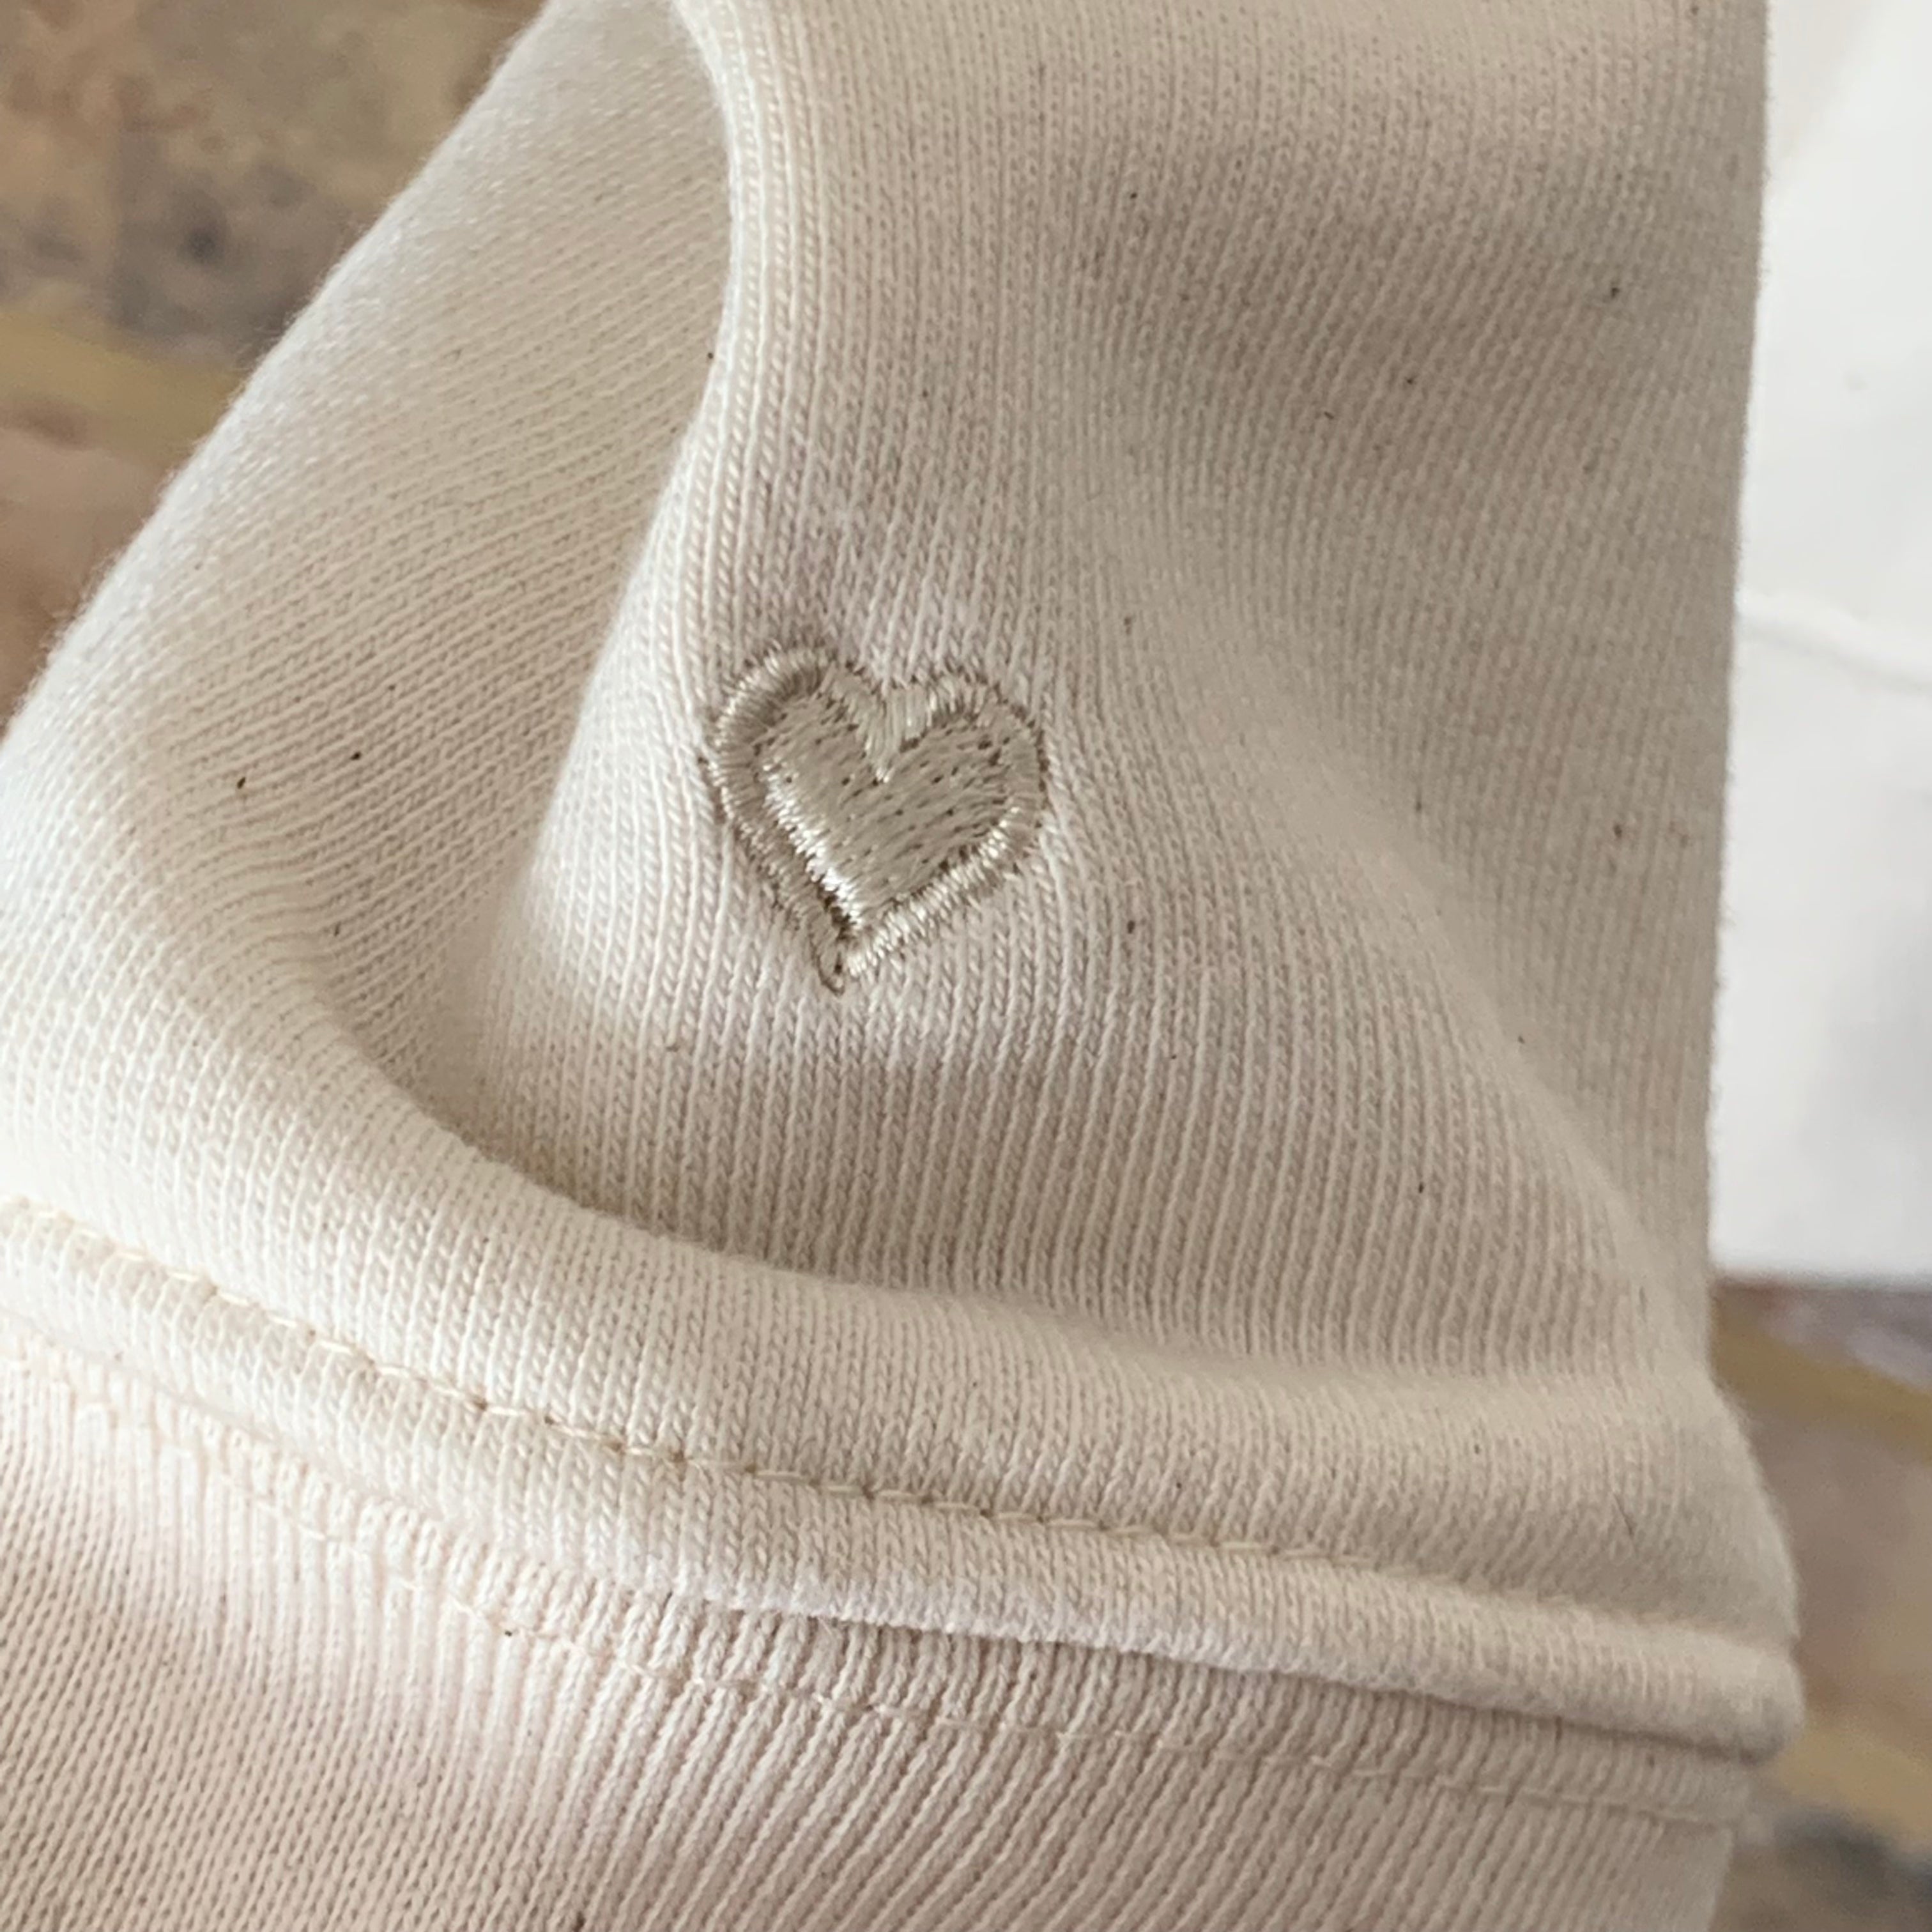 Cream 'Big Love' Sweatshirt